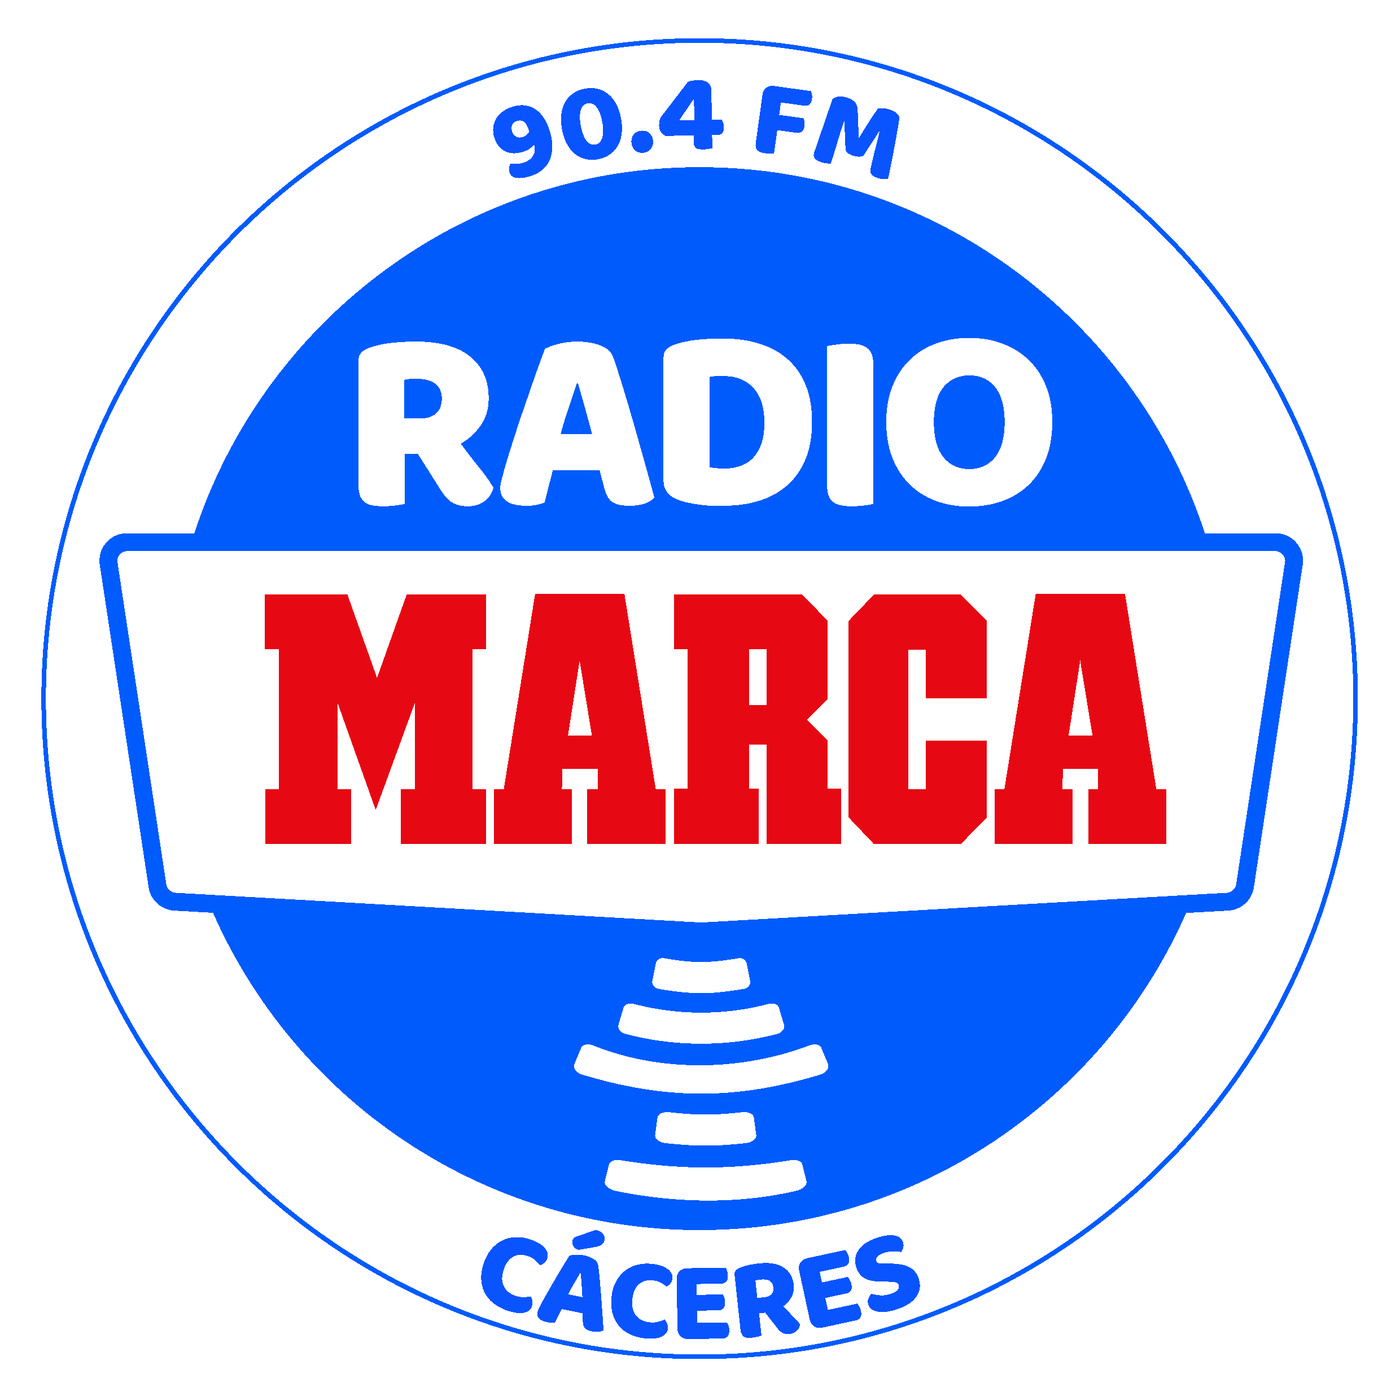 DIRECTO MARCA CÁCERES